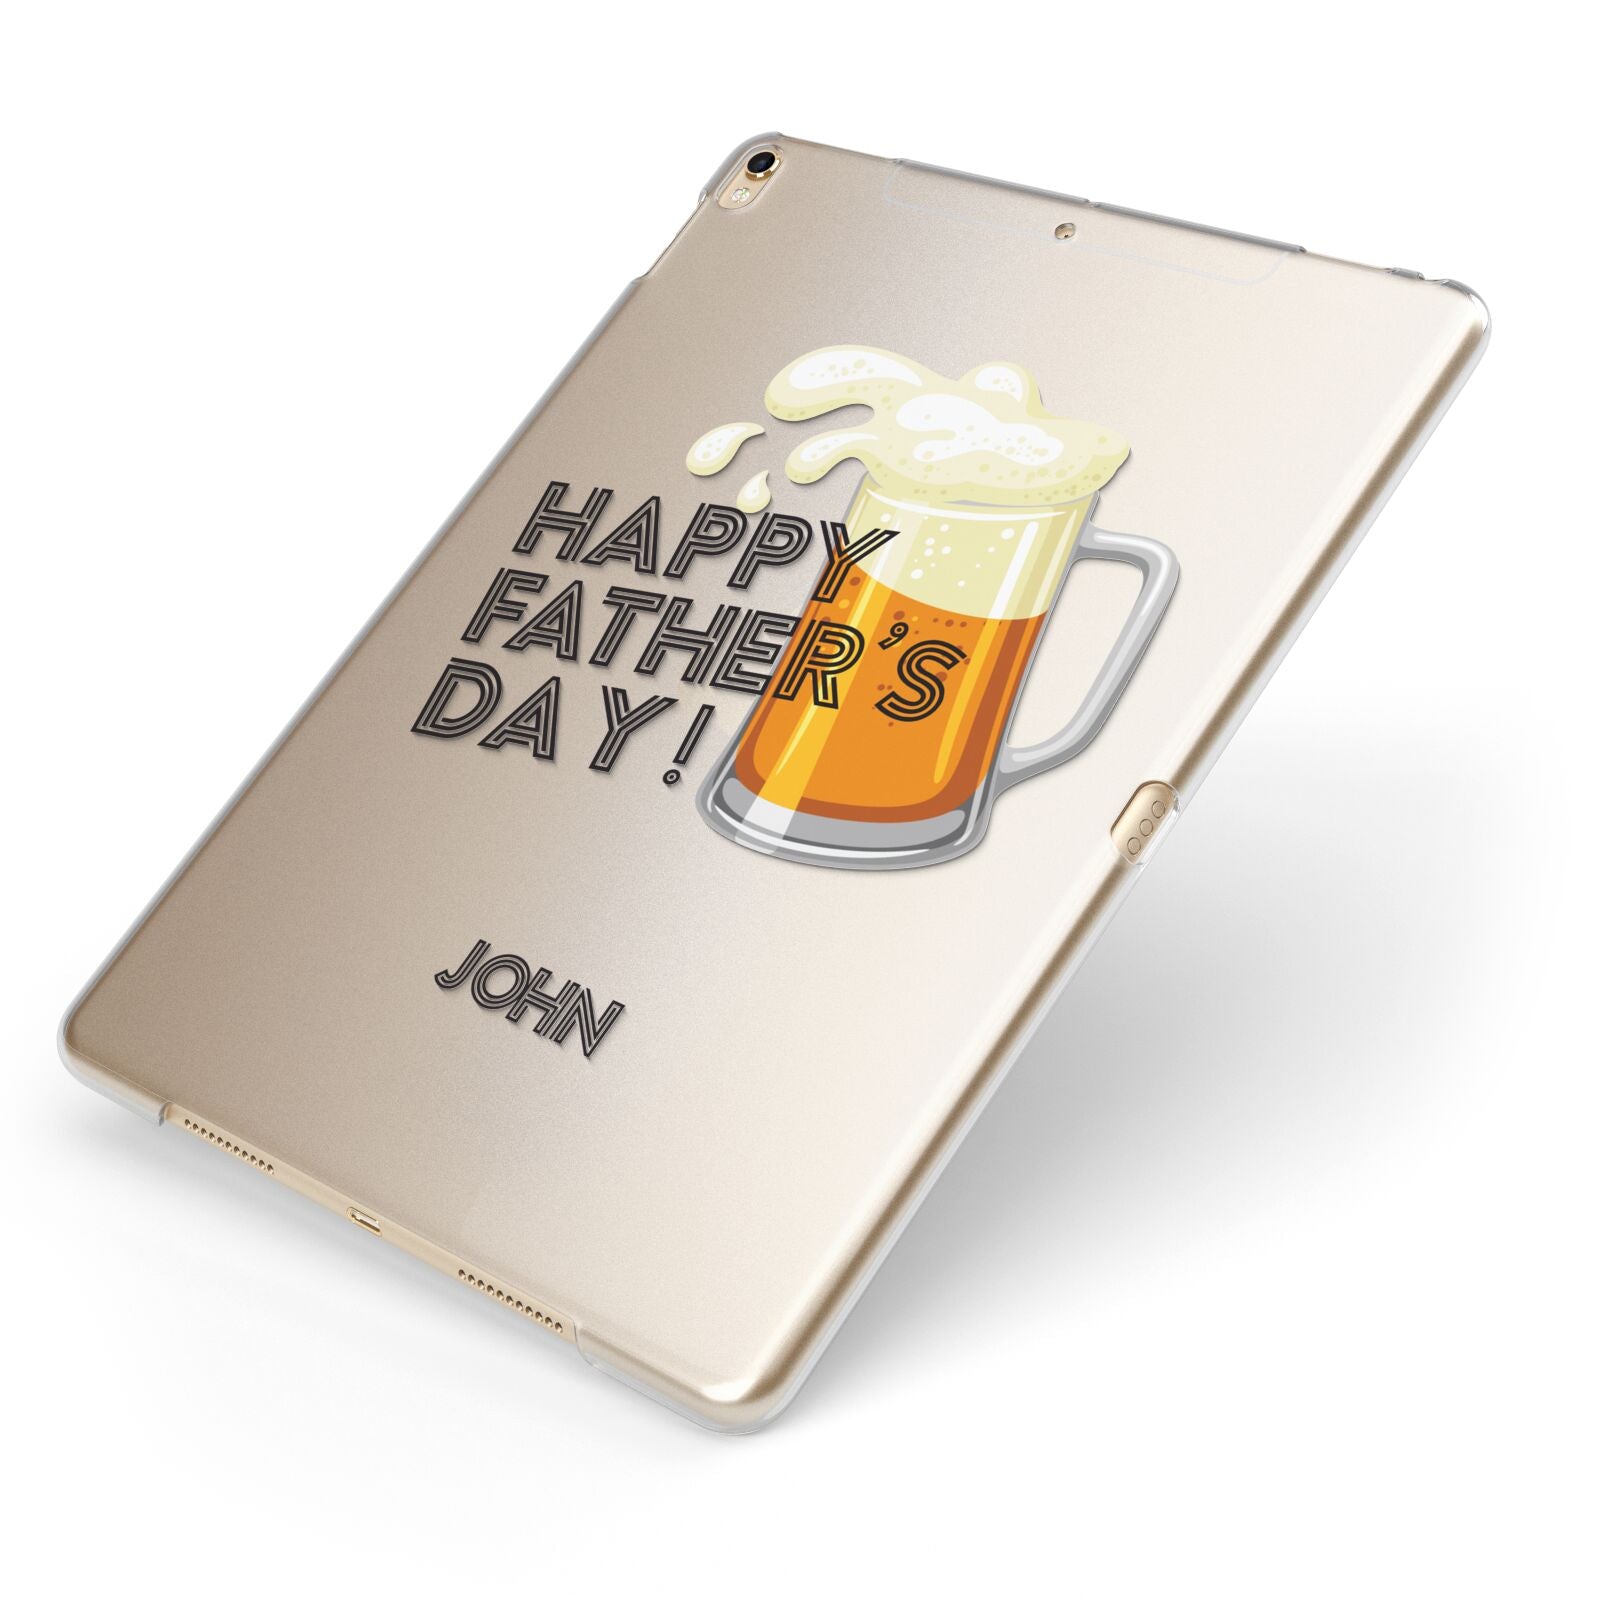 Fathers Day Custom Apple iPad Case on Gold iPad Side View